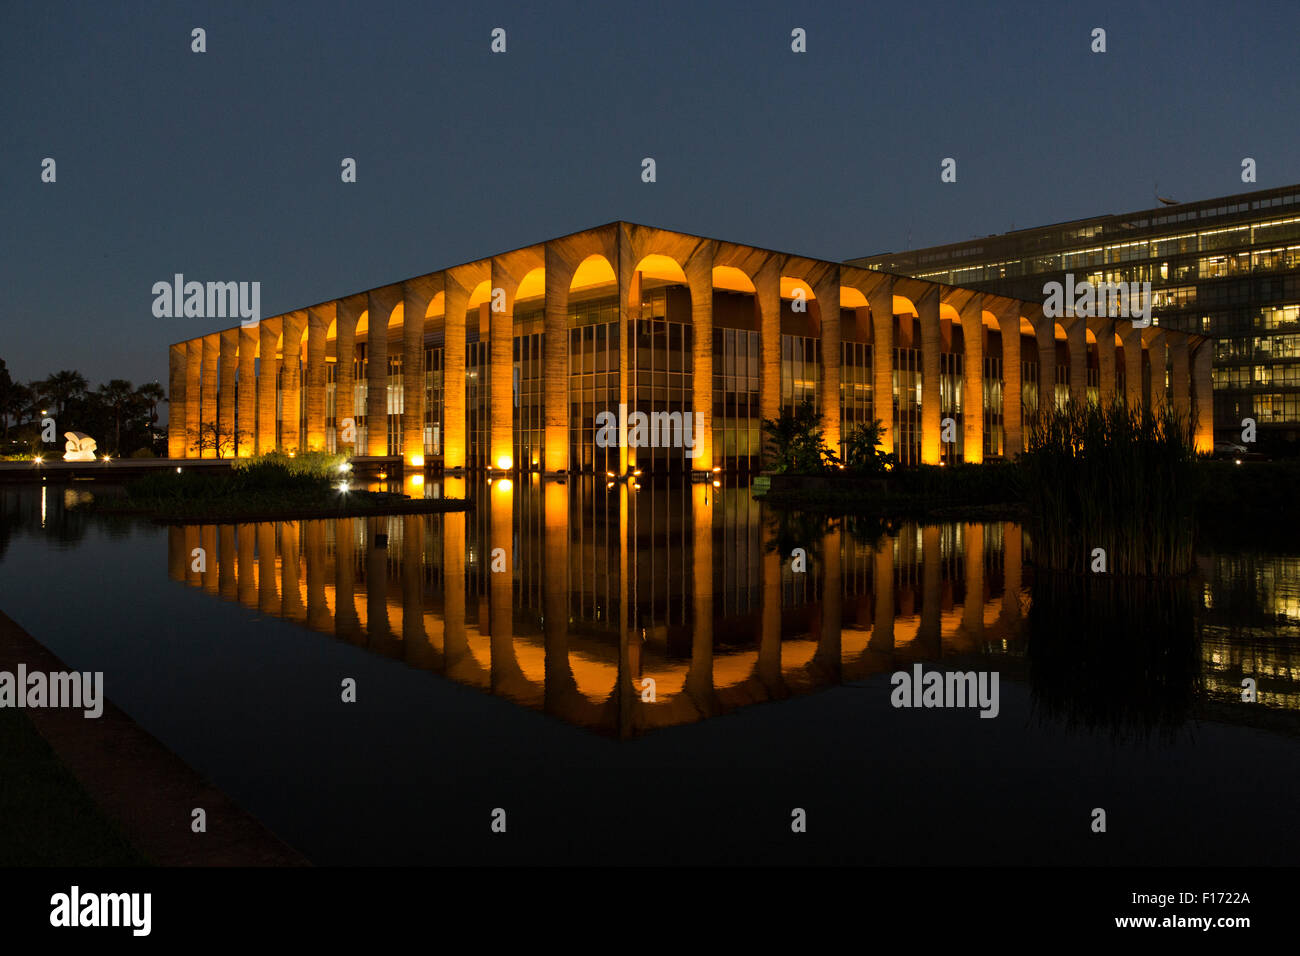 The Itamaraty Palace at night Stock Photo